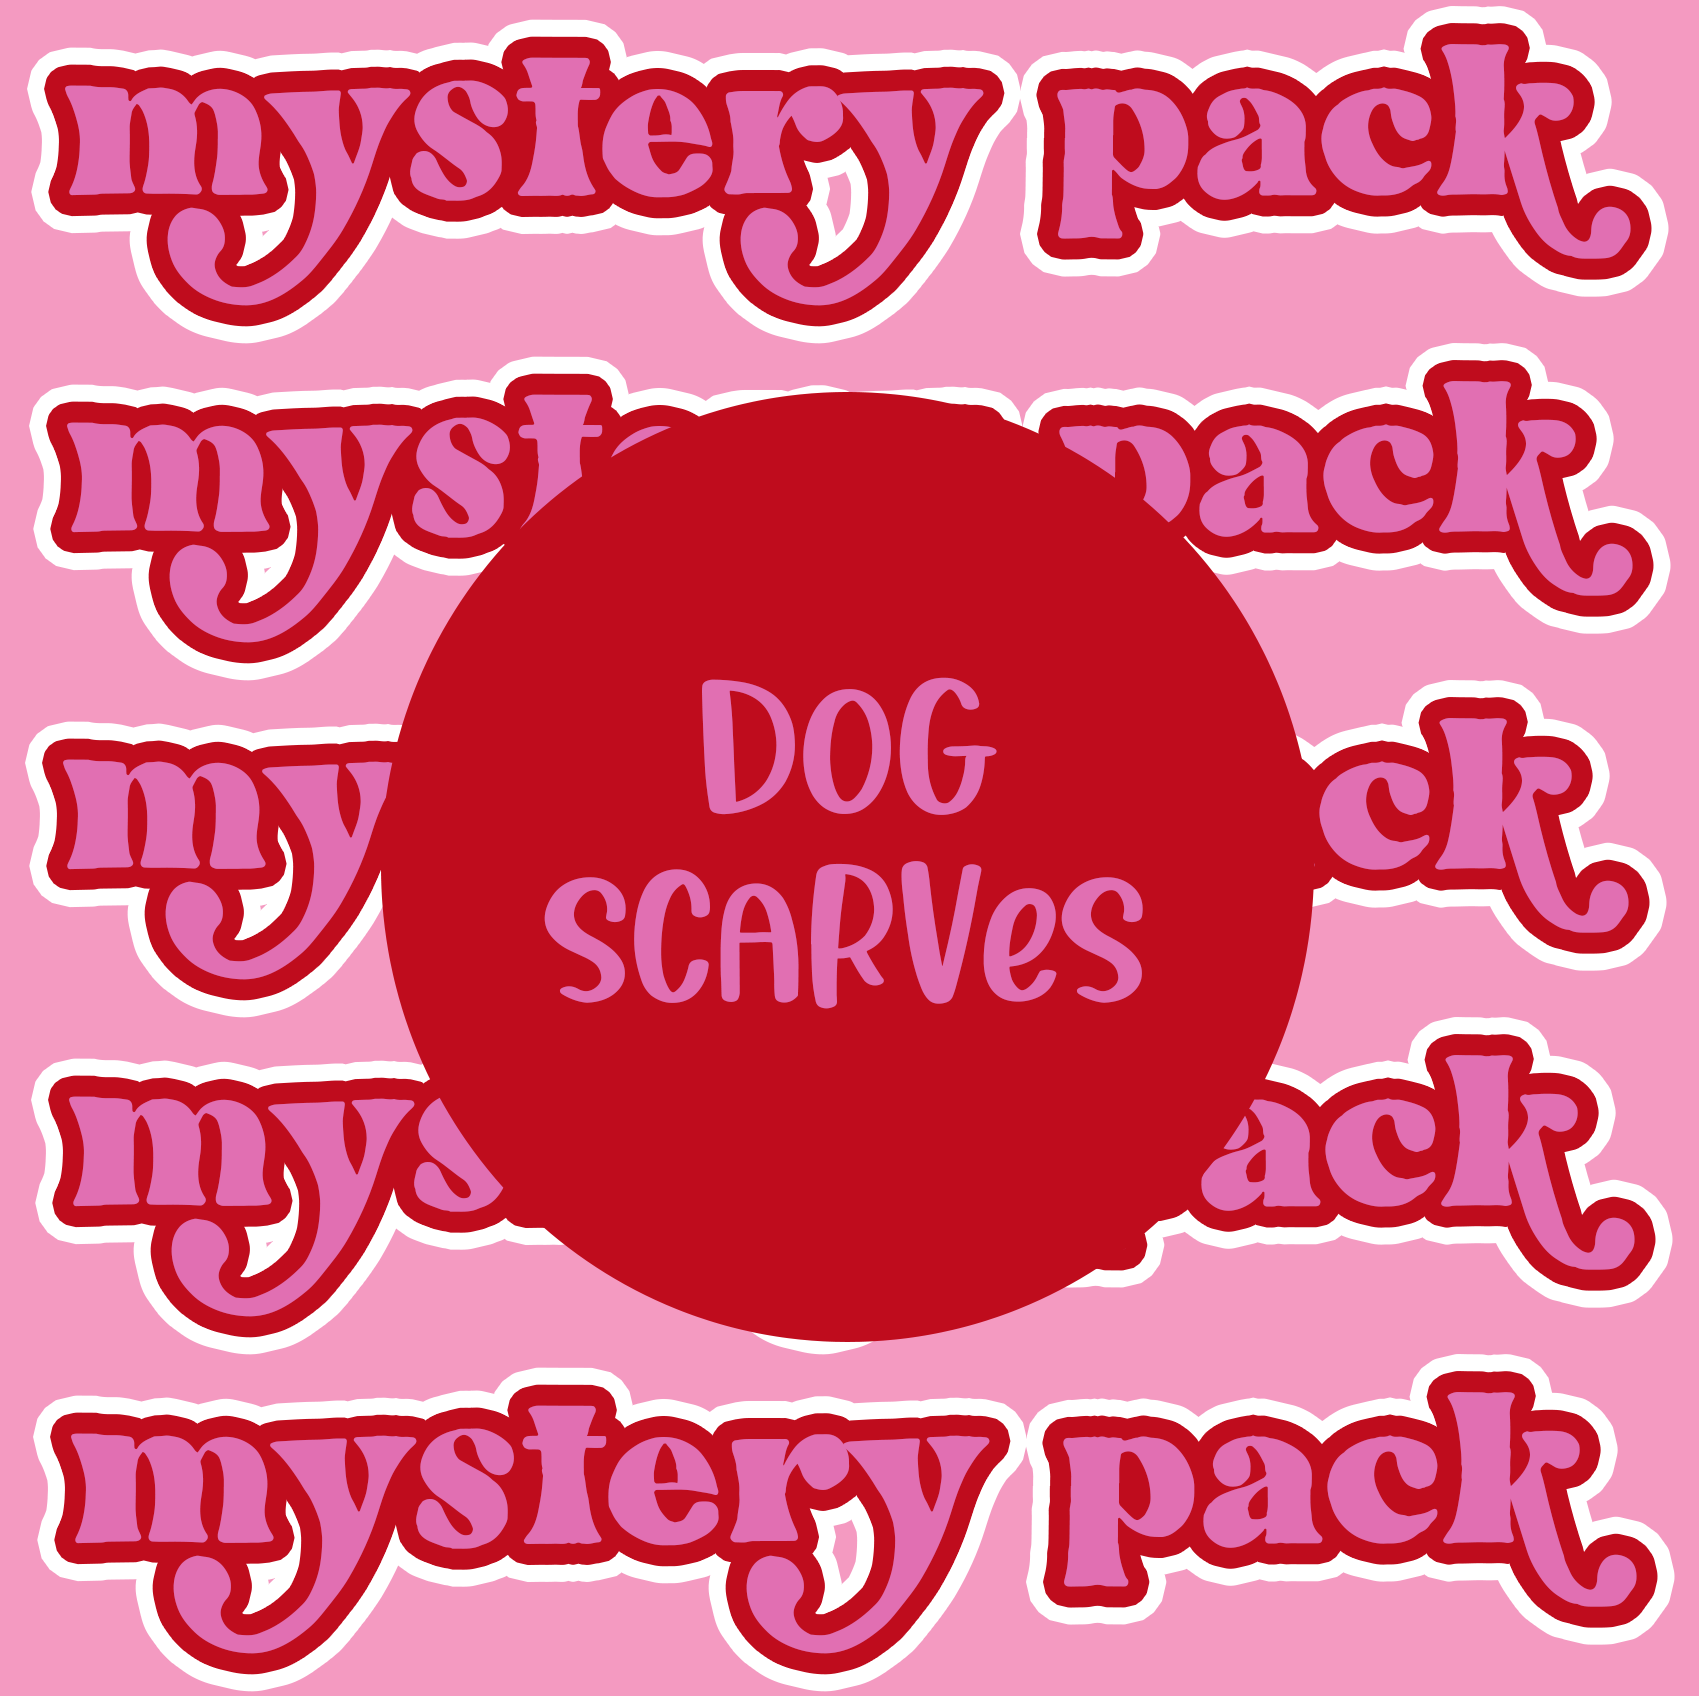 Mystery Pack - dog scarves